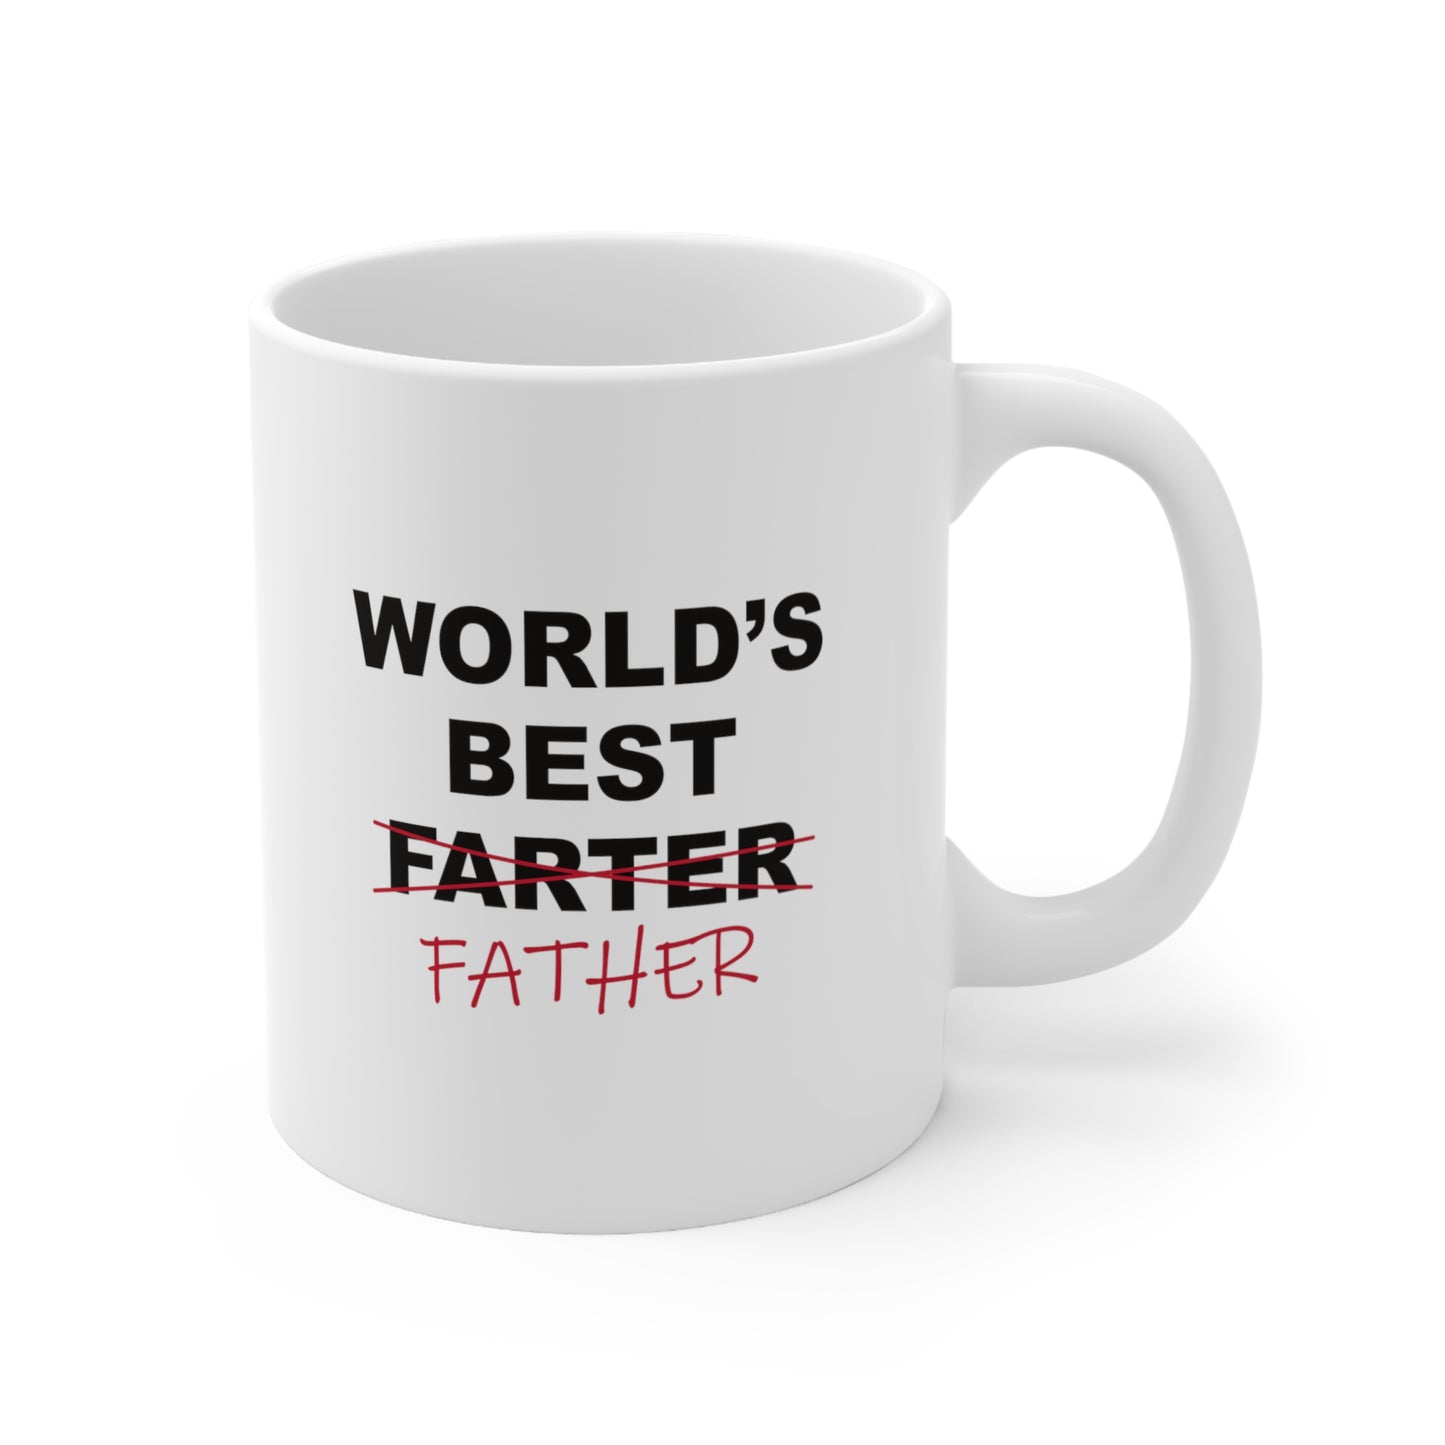 World's best farter father Coffee Mug 11oz